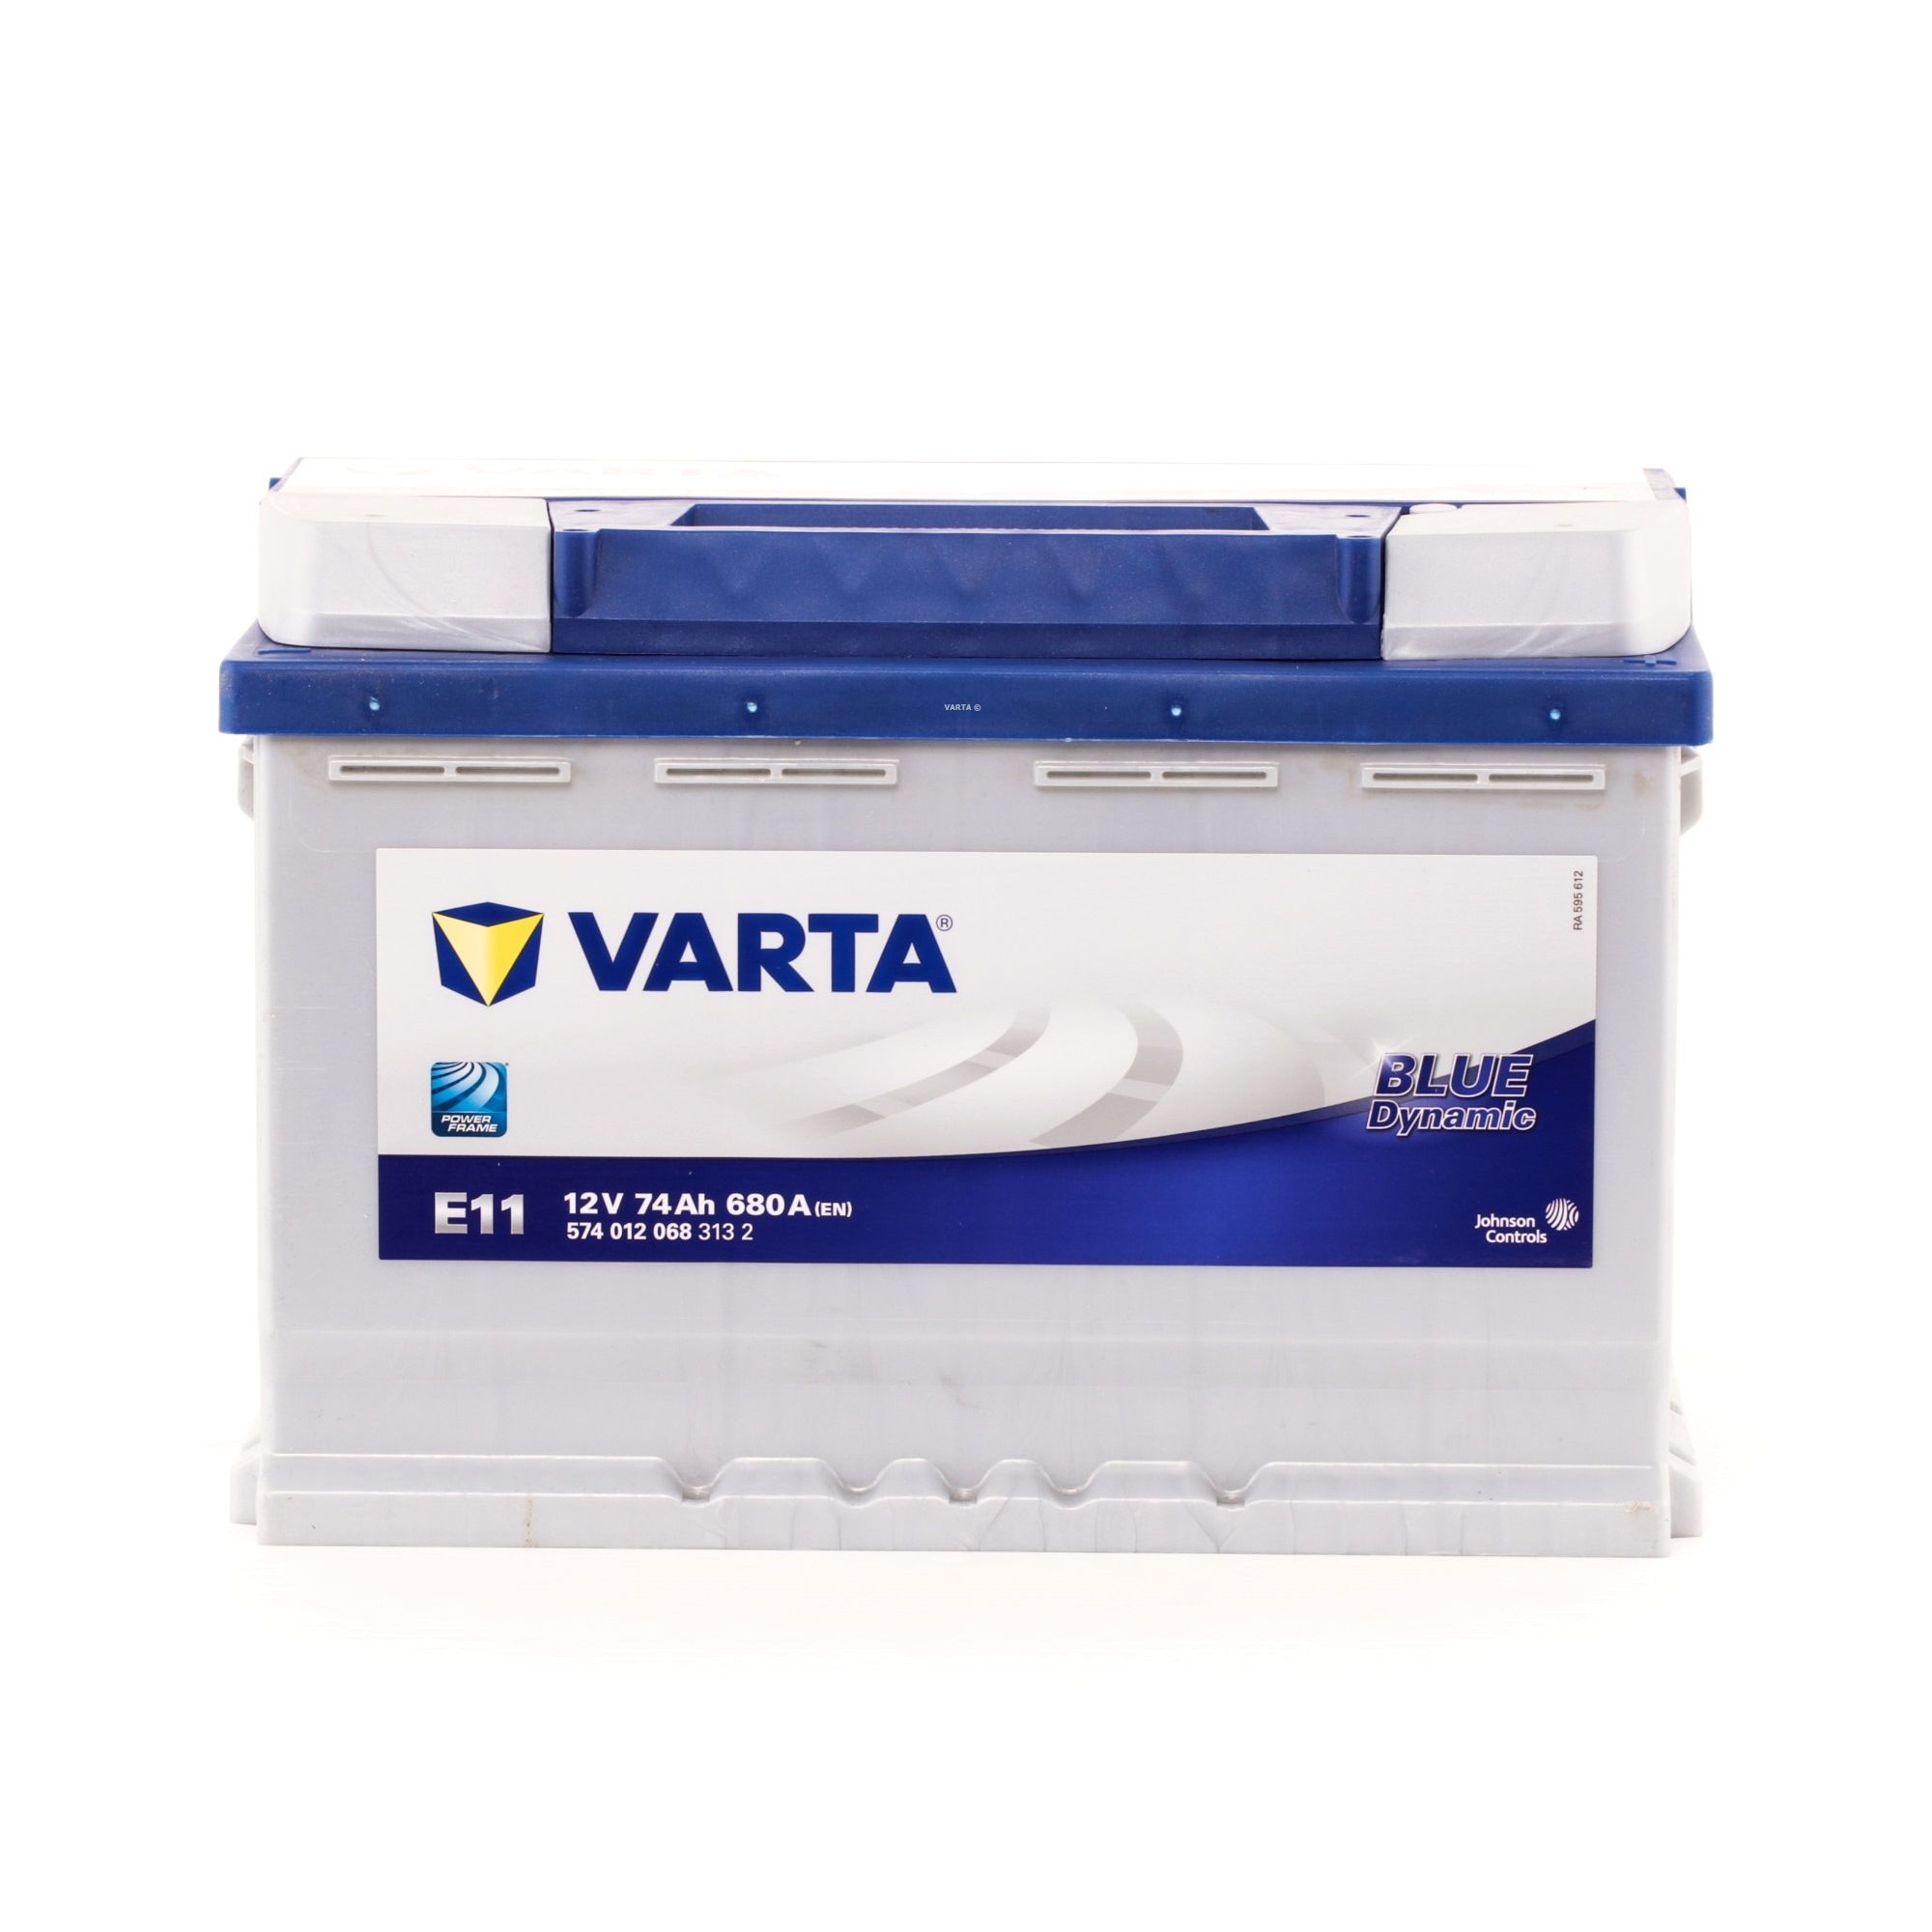 Batteria avviamento VARTA BLUE dynamic, E11 5740120683132